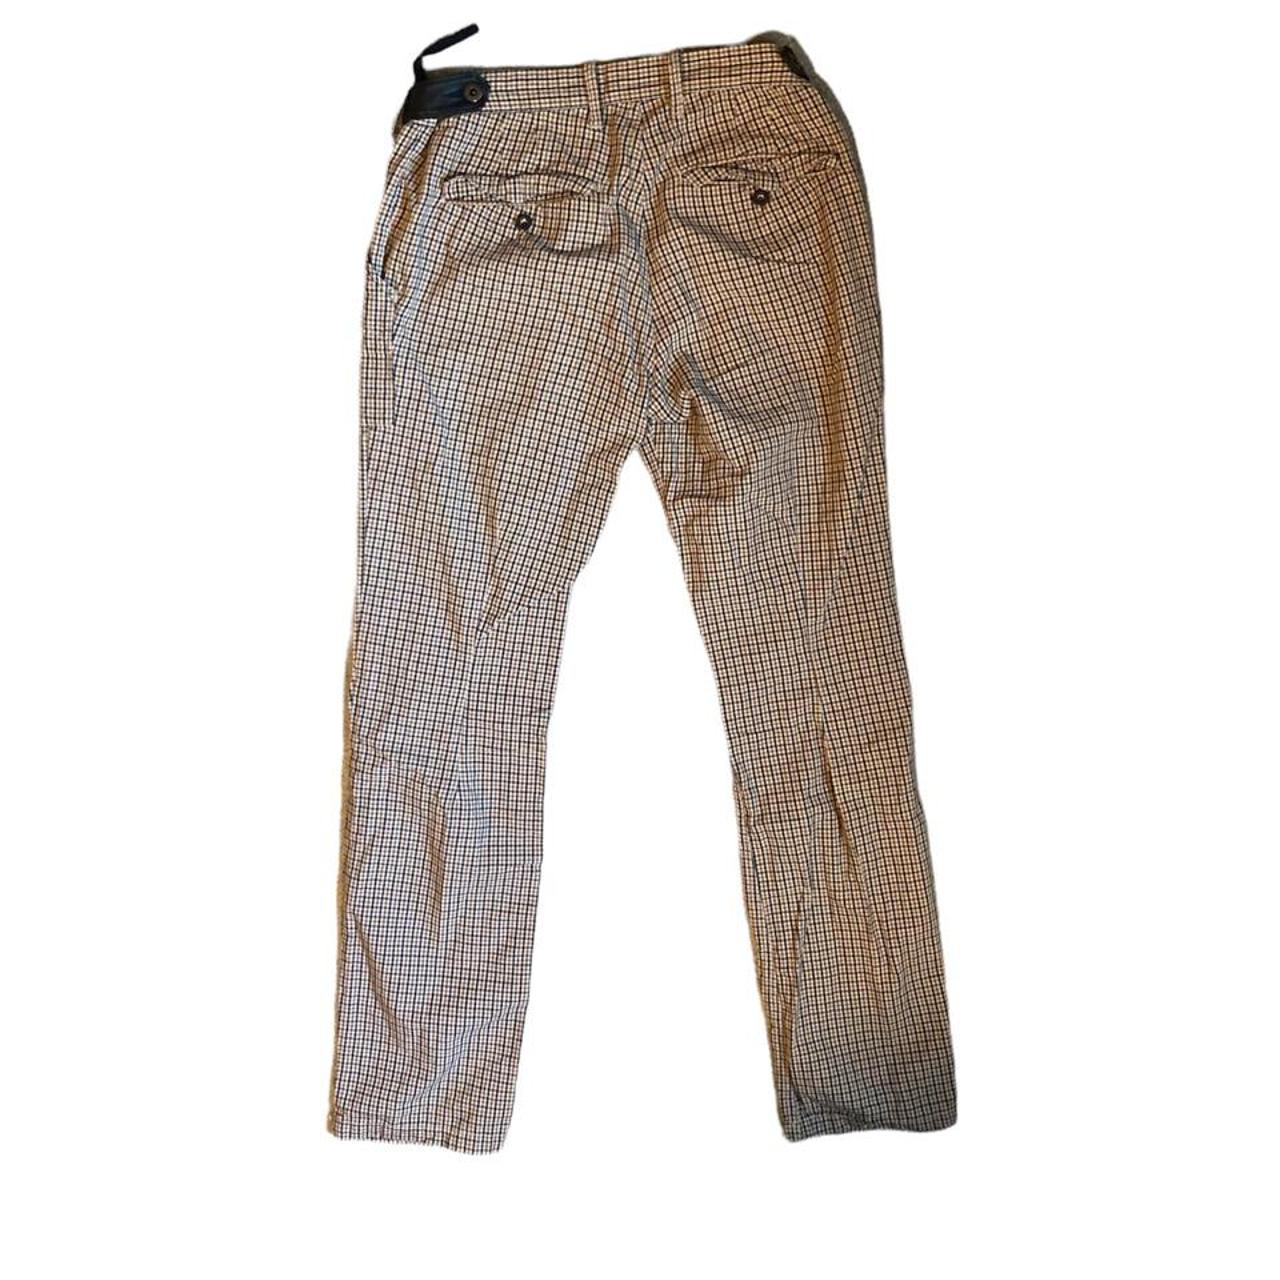 Product Image 2 - Mens Plaid Pants
9/10 condtion